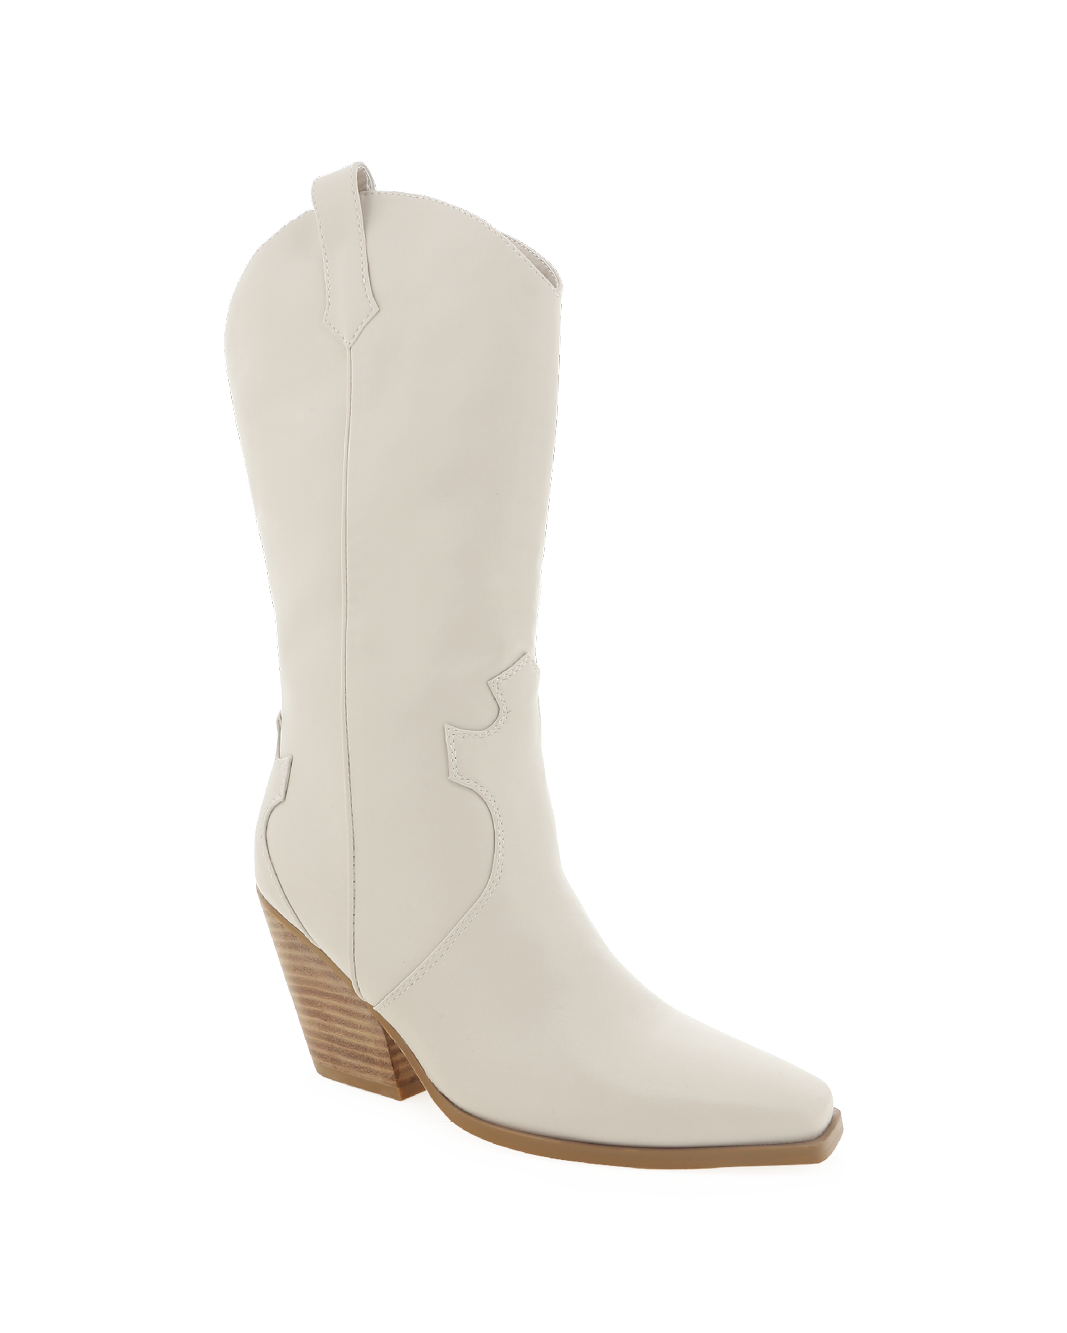 CLAUDETTE - CHALK-Boots-Billini-BILLINI USA